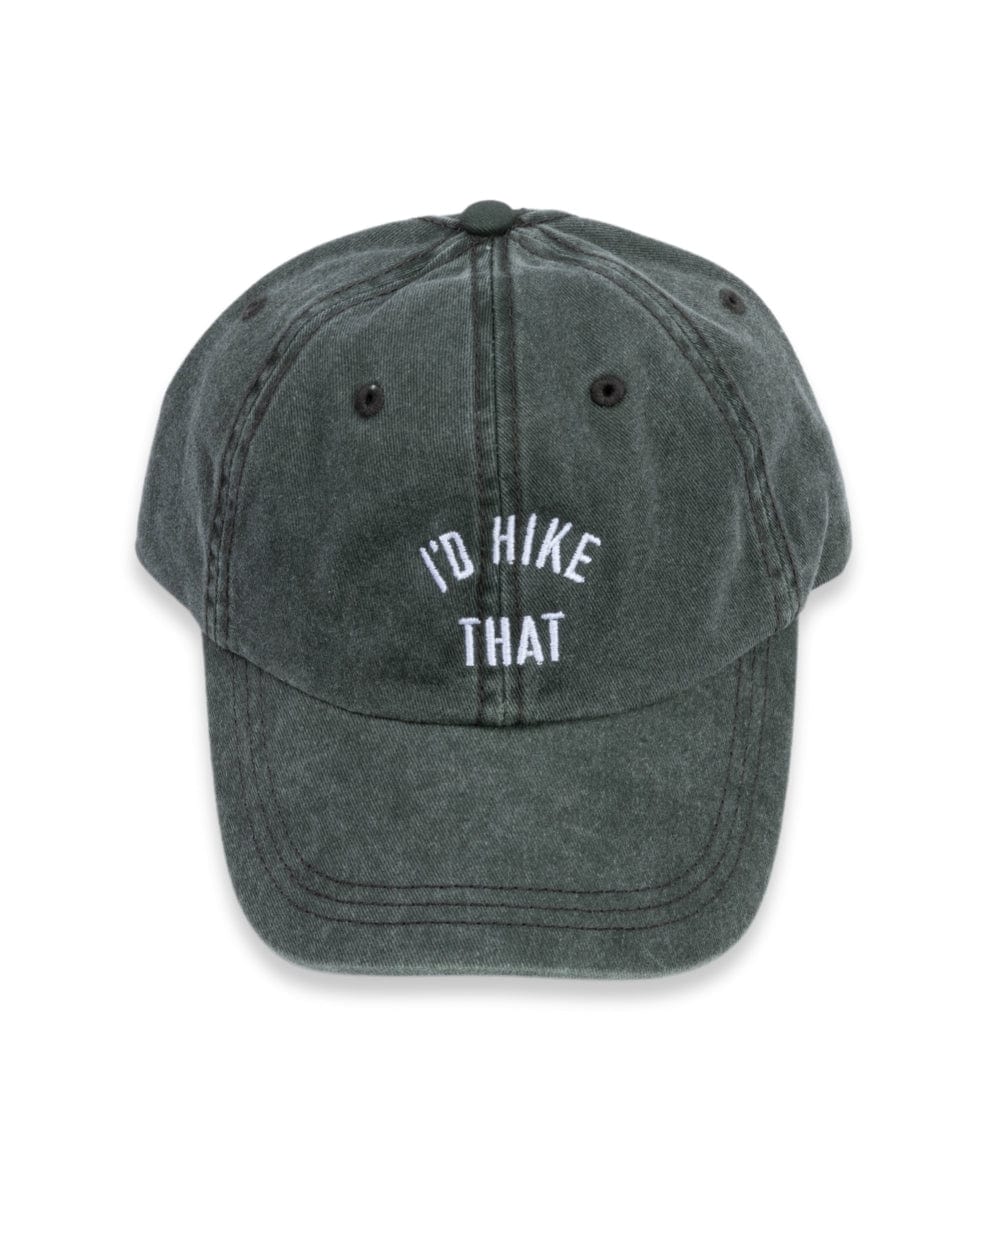 Wild Hat Dad Hat Women's Baseball Cap Gift for Her Hiking Cap